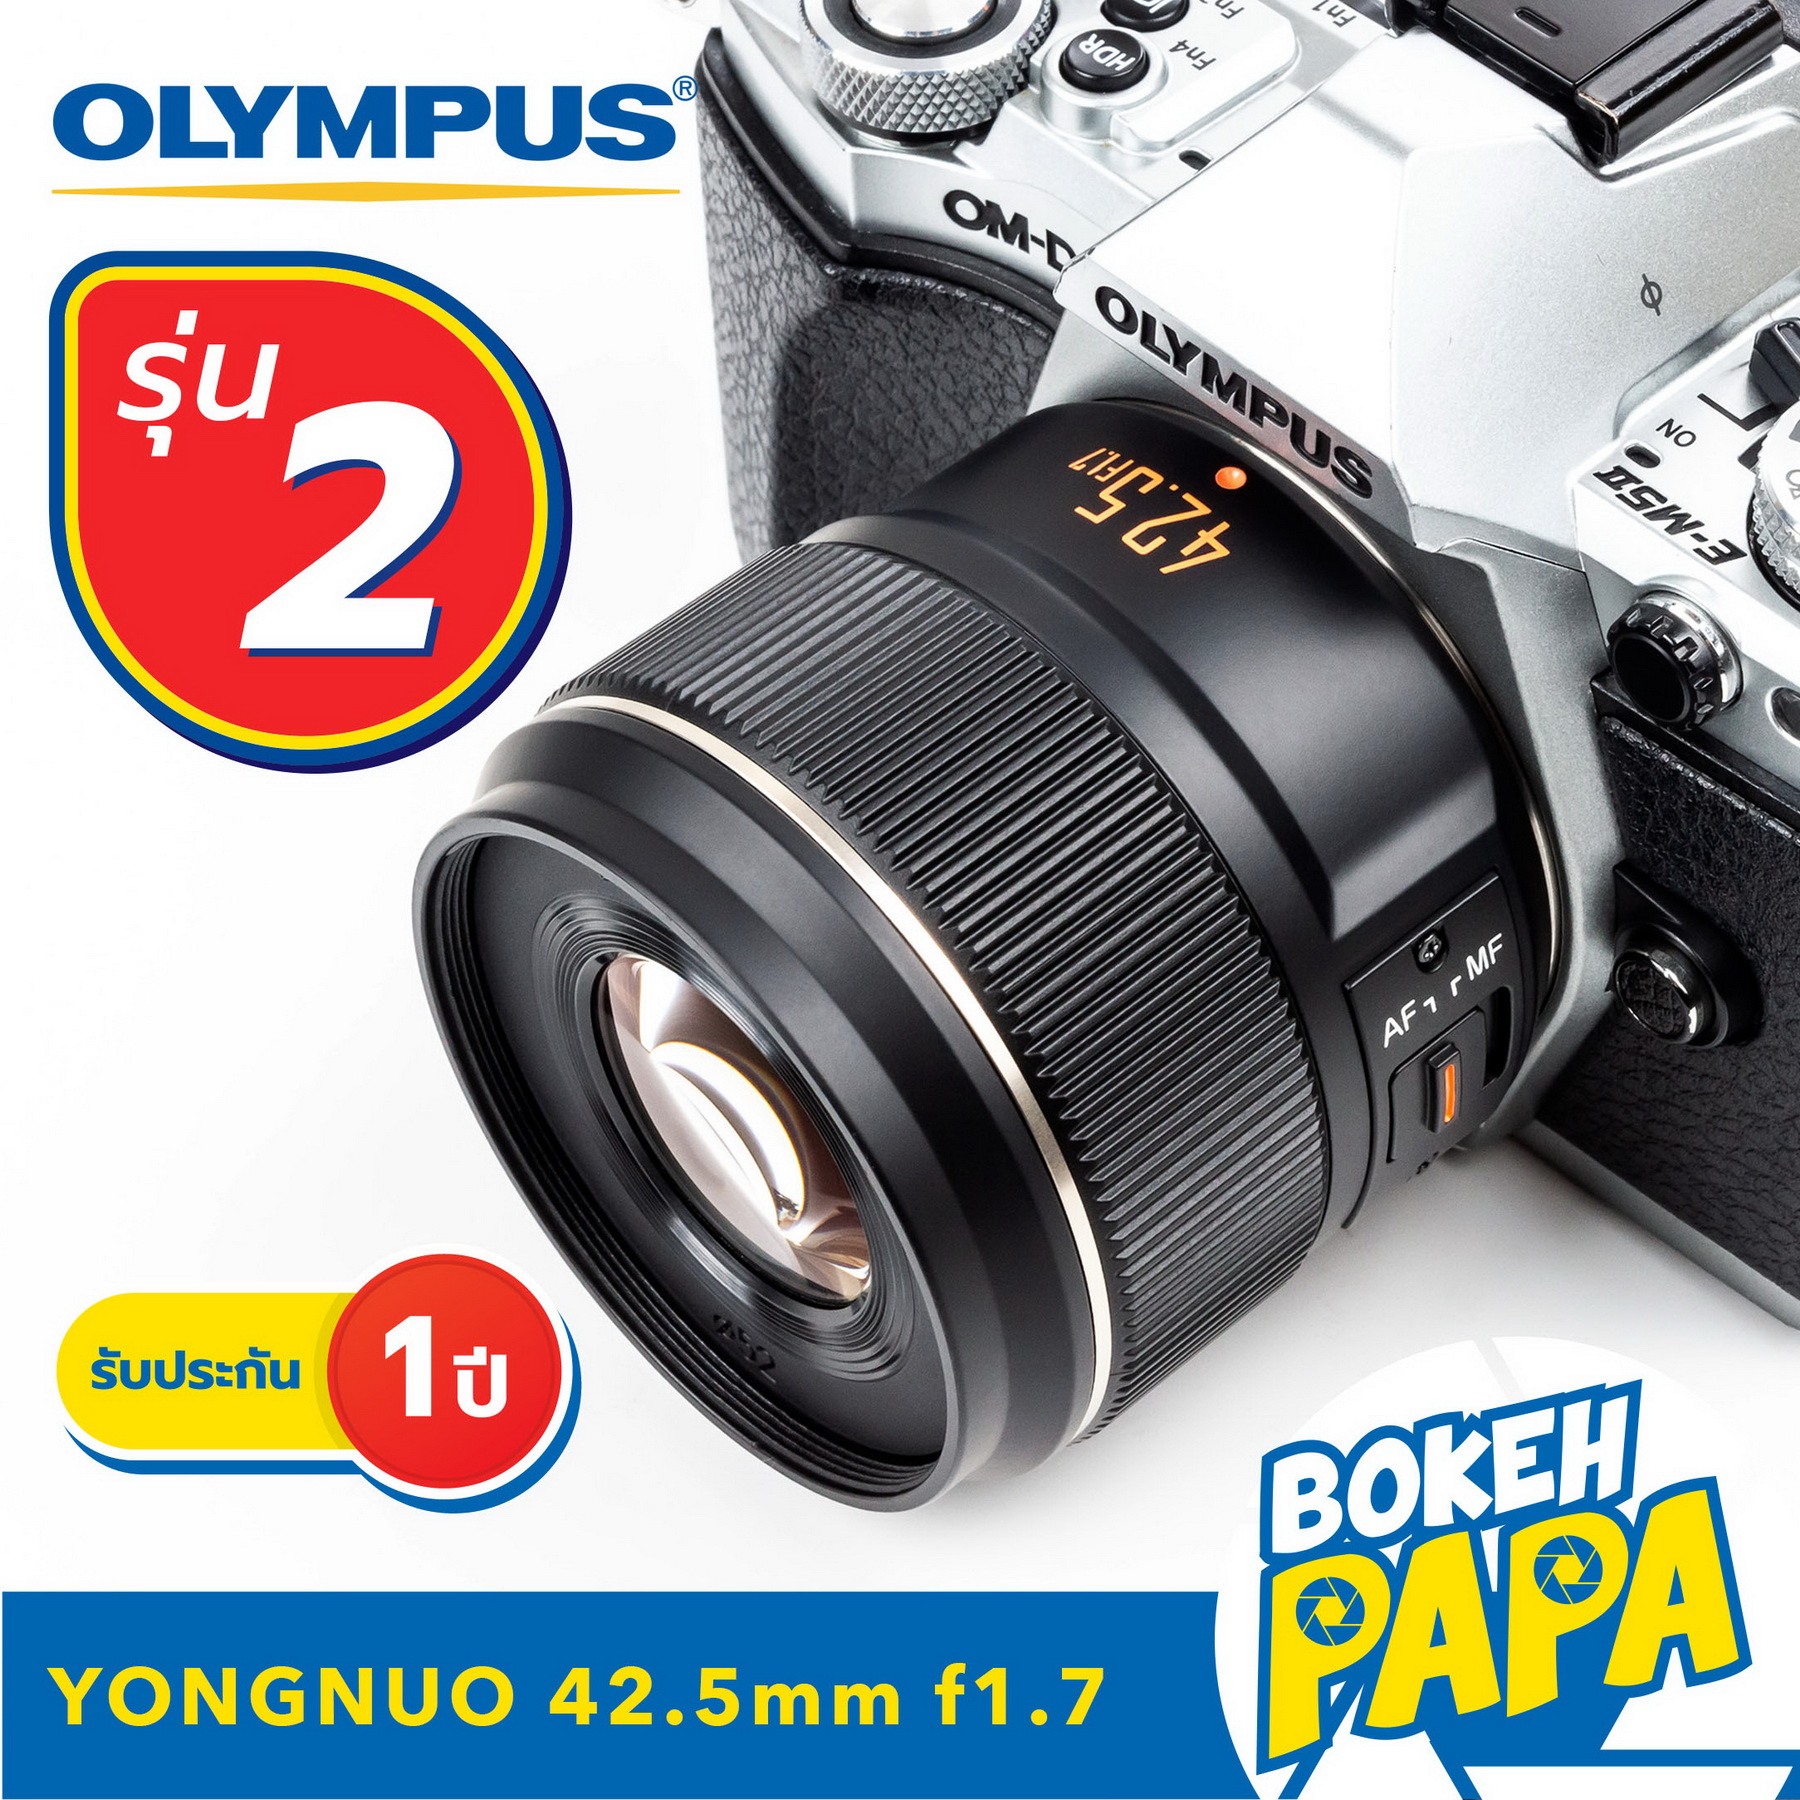 Yongnuo 42.5mm F1.7 Mark2 เลนส์ออโต้โฟกัส สำหรับใส่กล้อง OLYMPUS AND PANASONIC LUMIX Mirrorless ได้ทุกรุ่น ( YN AUTO FOCUS Lens 42.5mm F 1.7 II ) ( AF / MF ) ( เลนส์ละลาย ) ( หน้าชัดหลังเบลอ ) ( สำหรับ กล้อง โอลิมปัส และ พานาโซนิค ) ( ออโตโฟกัส )